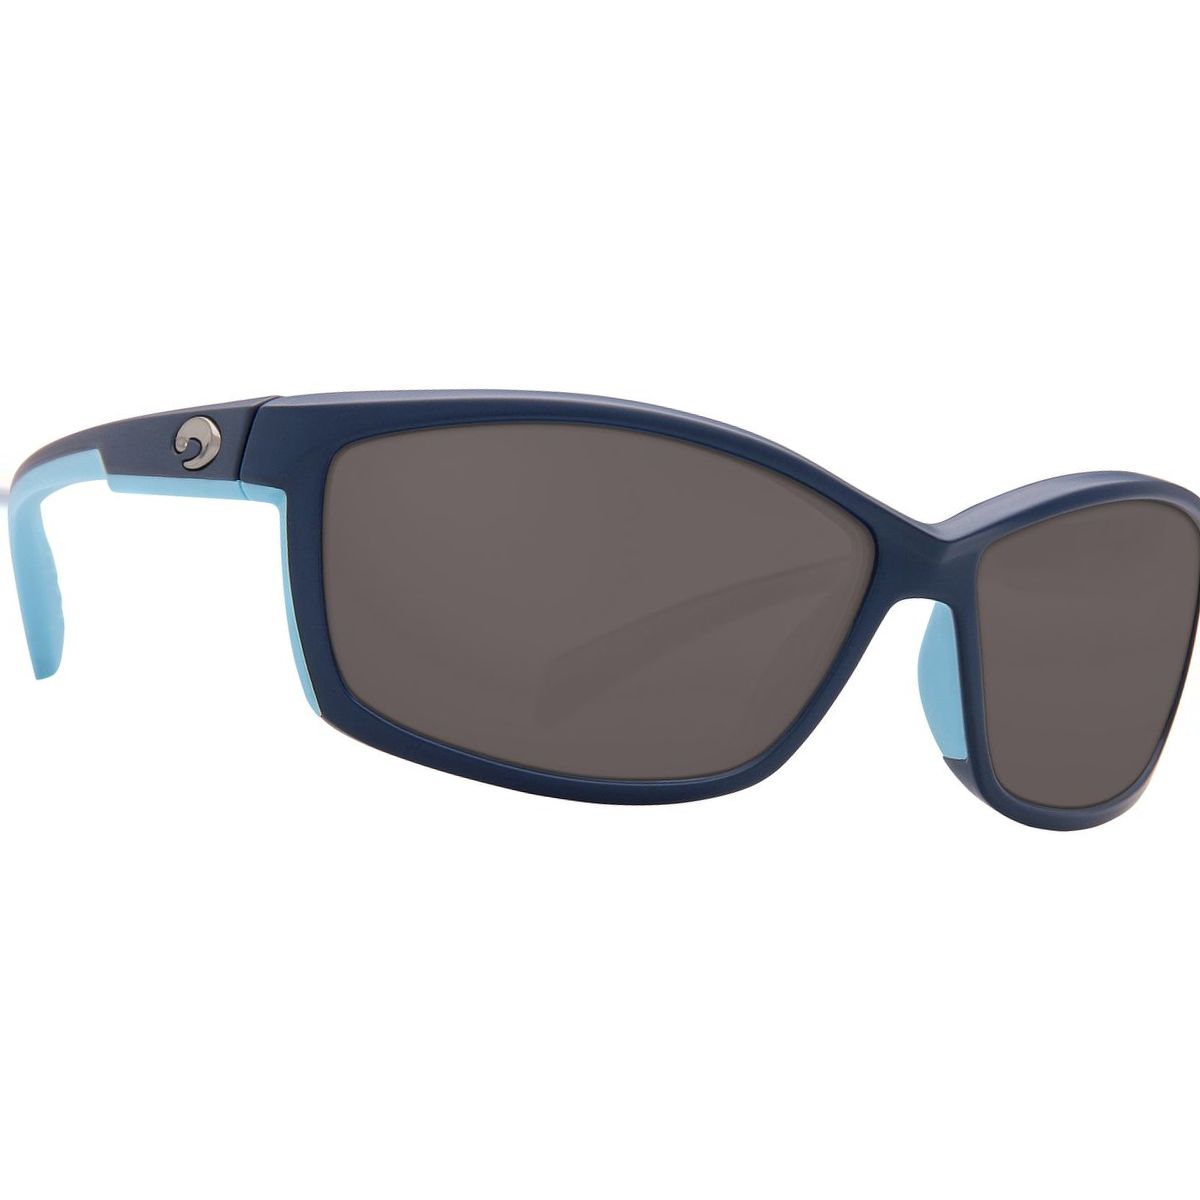 Costa Manta 580G Polarized Sunglasses - Women's